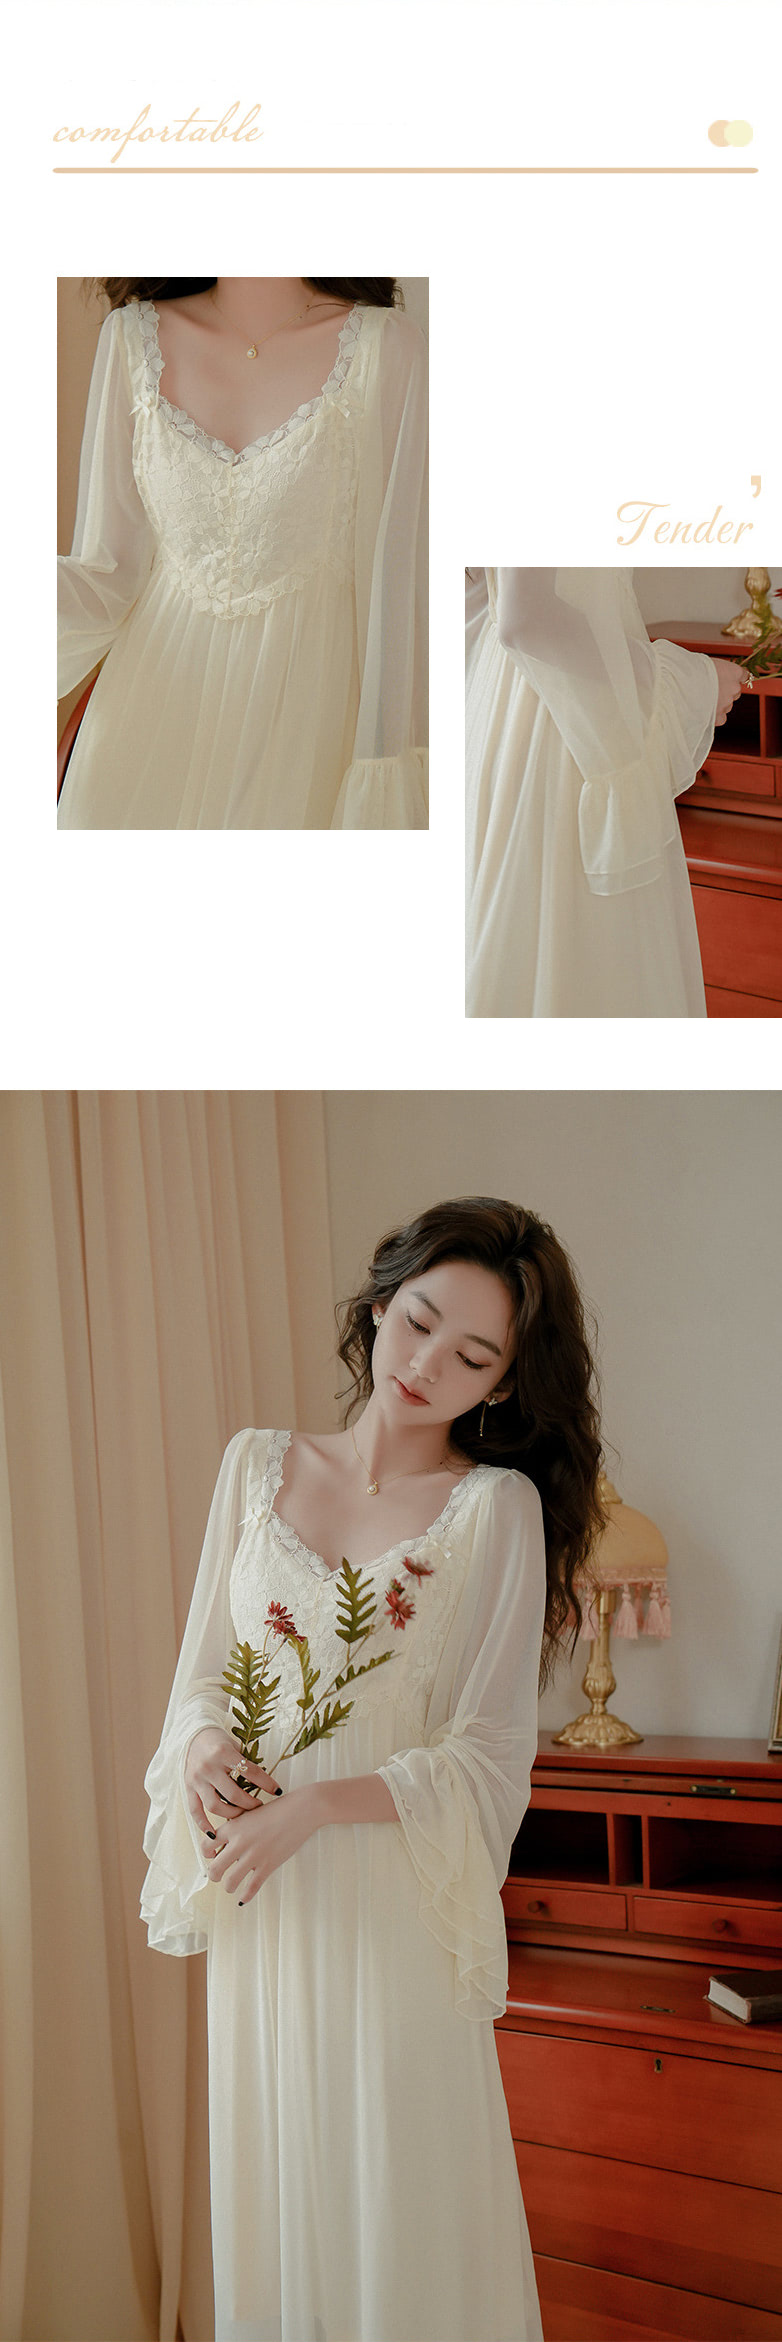 Princess-Style-Long-Tulle-Lace-Home-Casual-Dress-Pajama-Sleepwear11